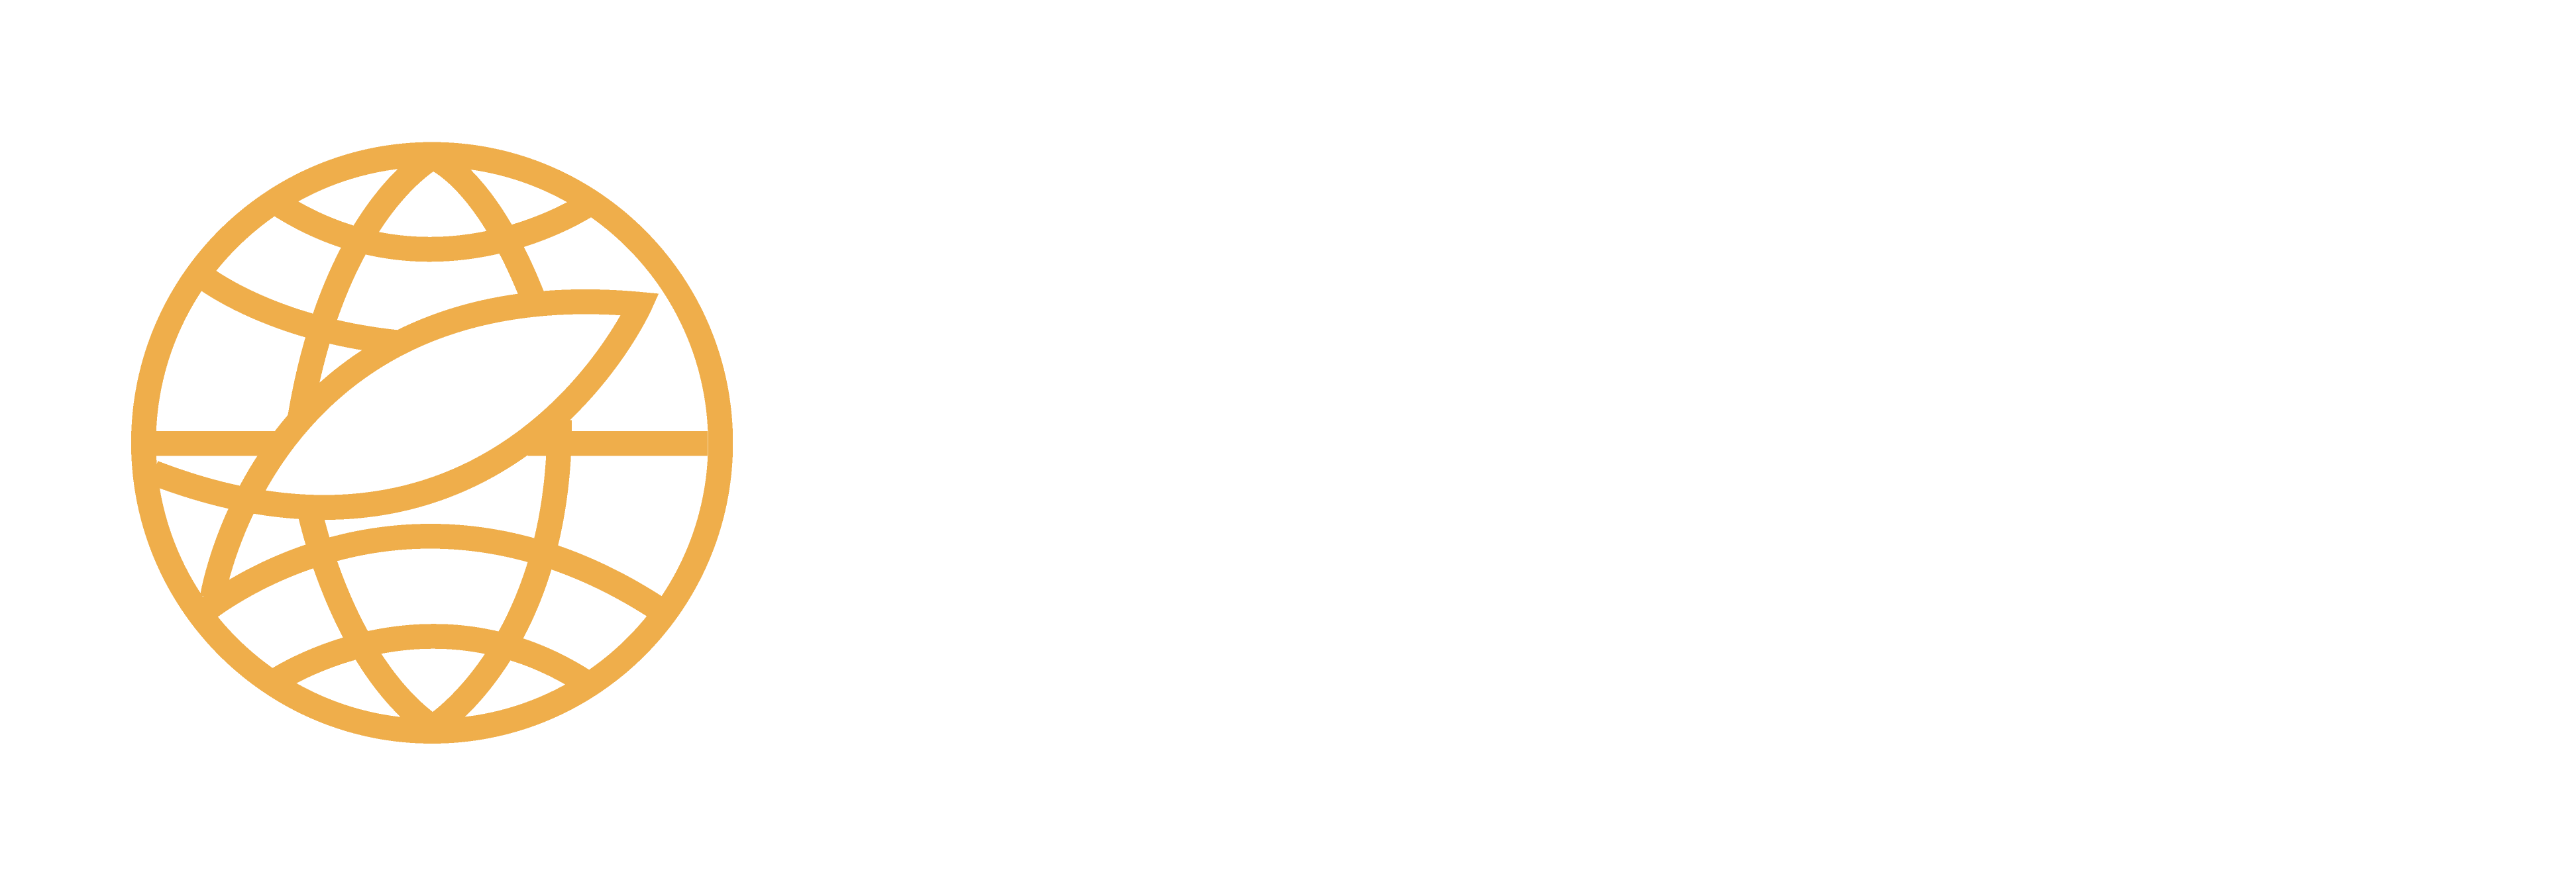 Evangélisation Explosive - Burkina Faso